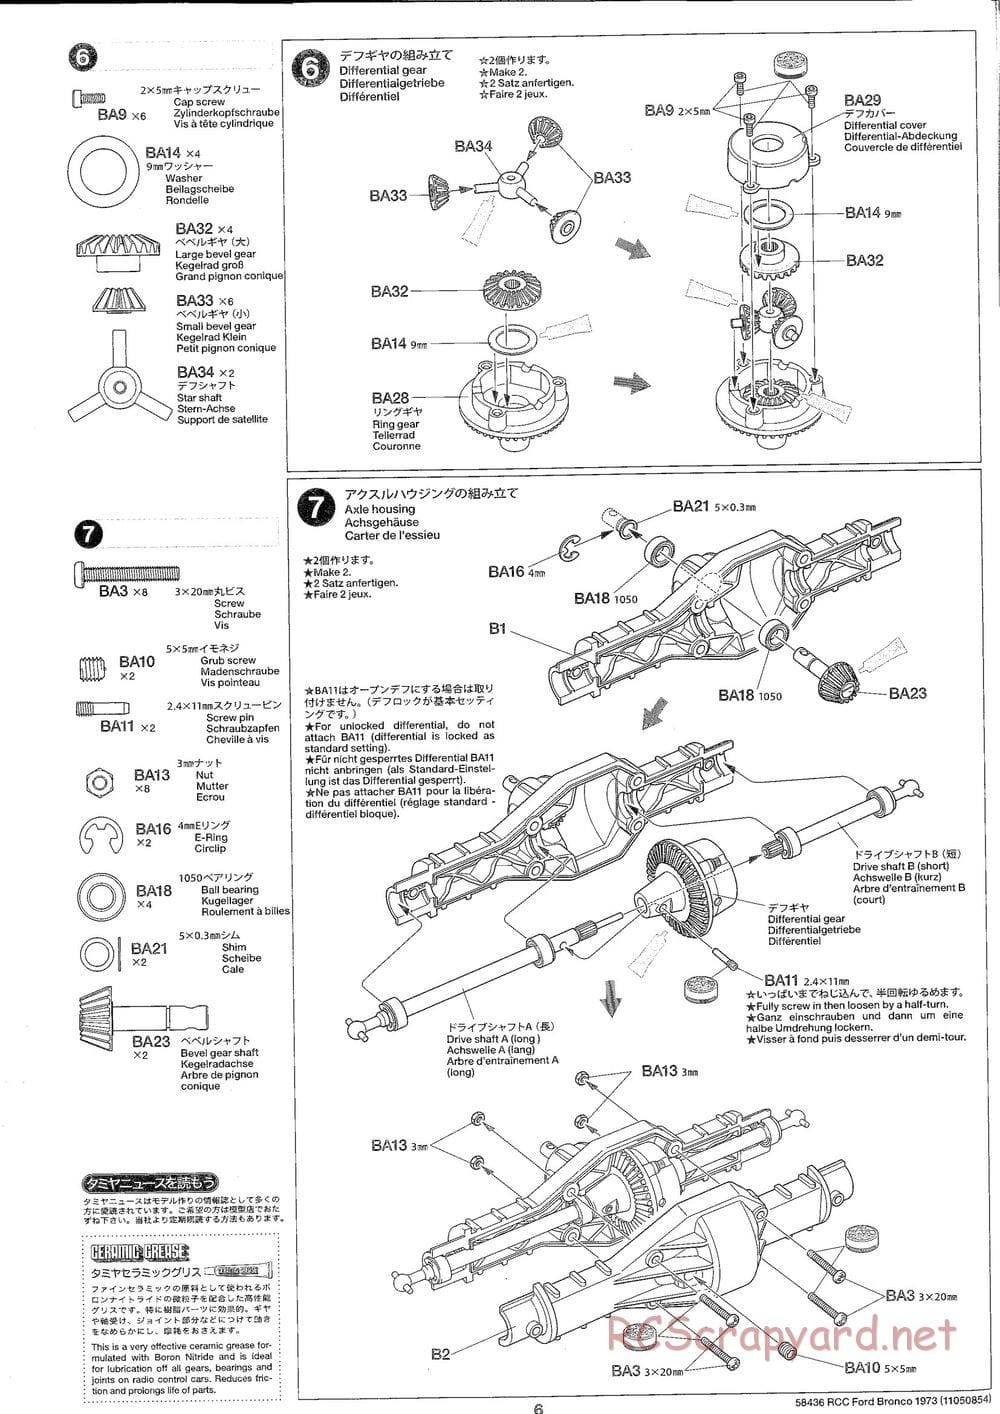 Tamiya - Ford Bronco 1973 - CR-01 Chassis - Manual - Page 6